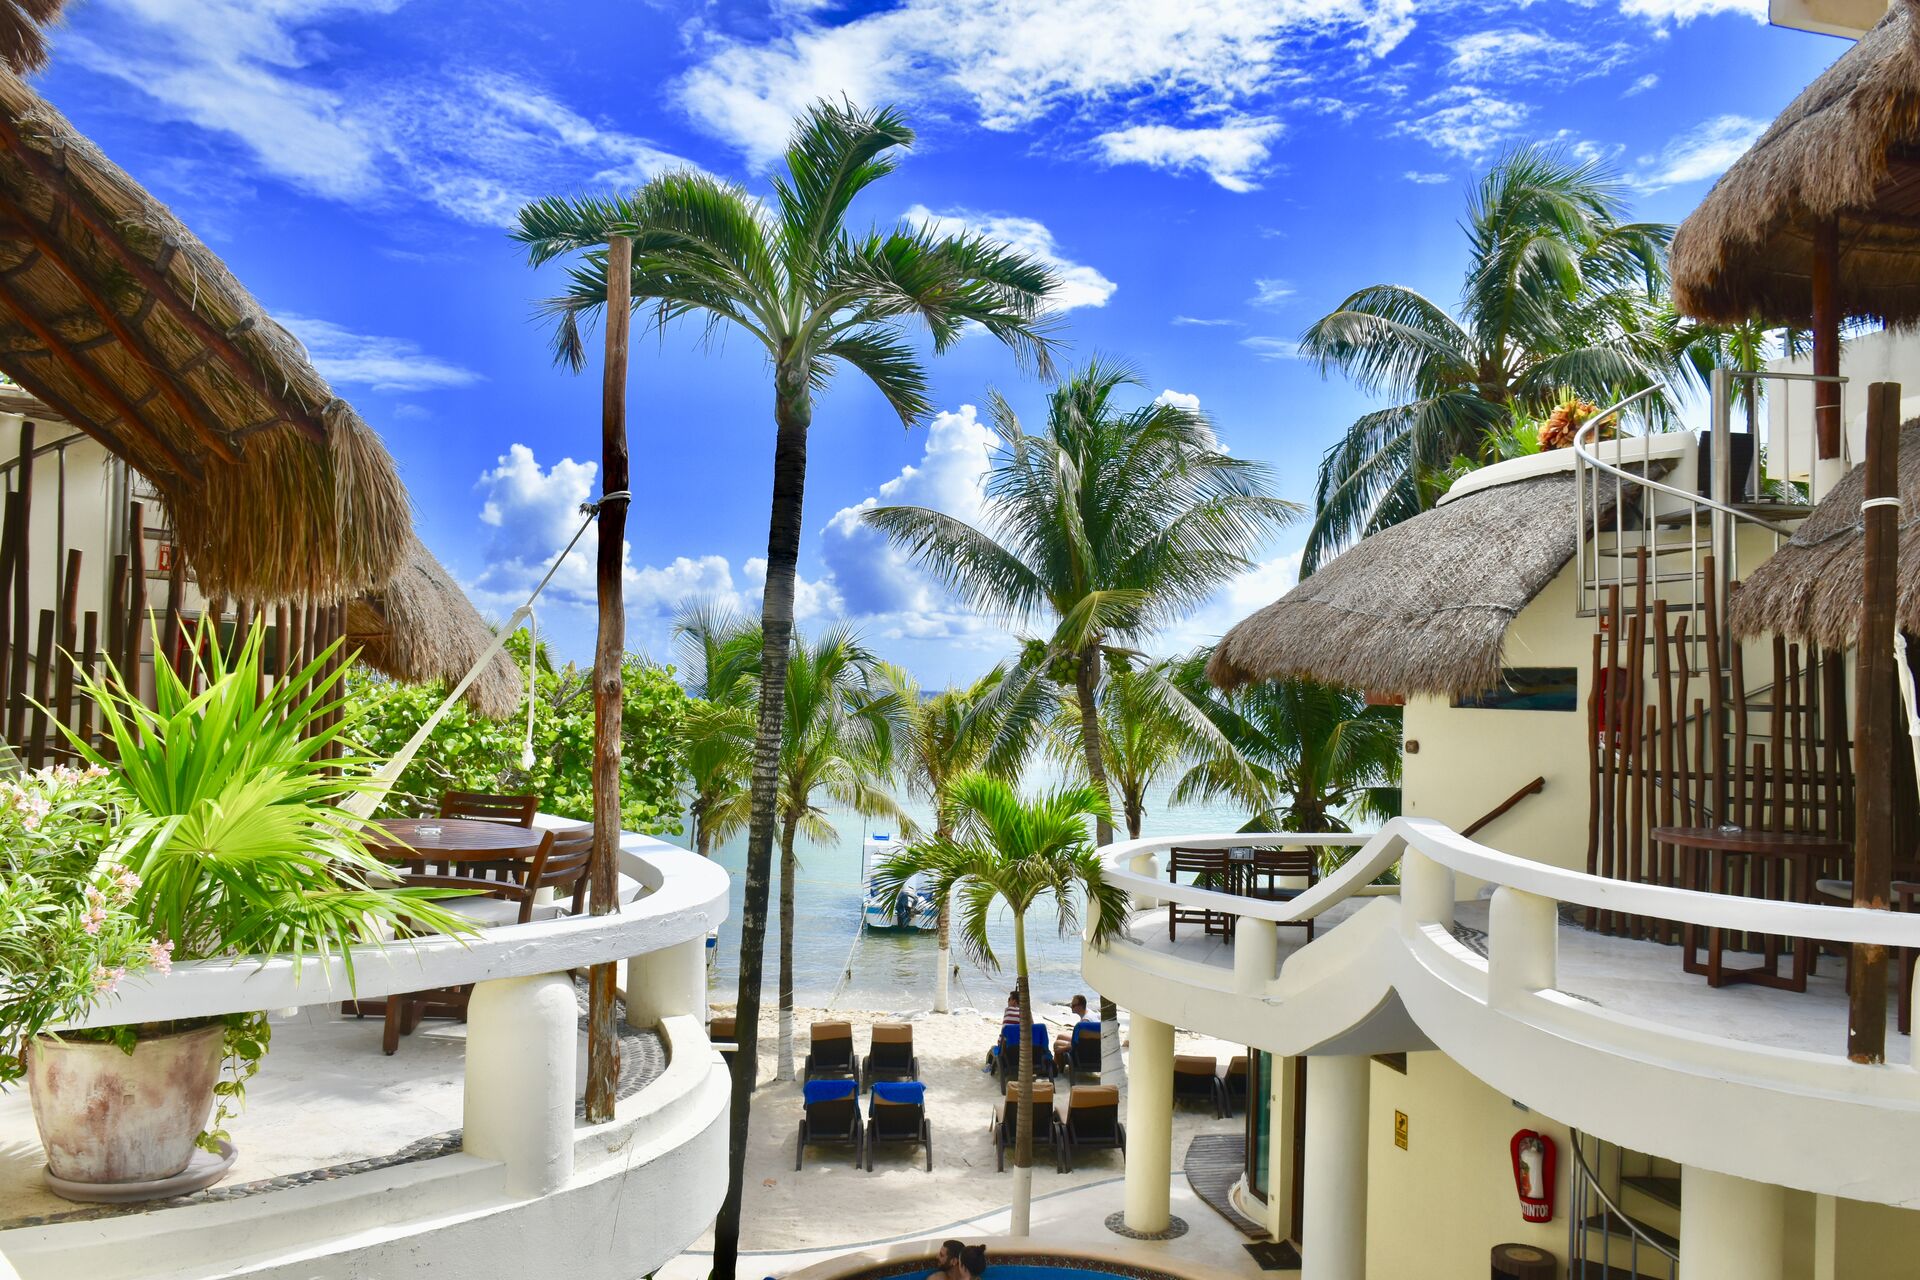 Playa Palms, ocean front hotel.